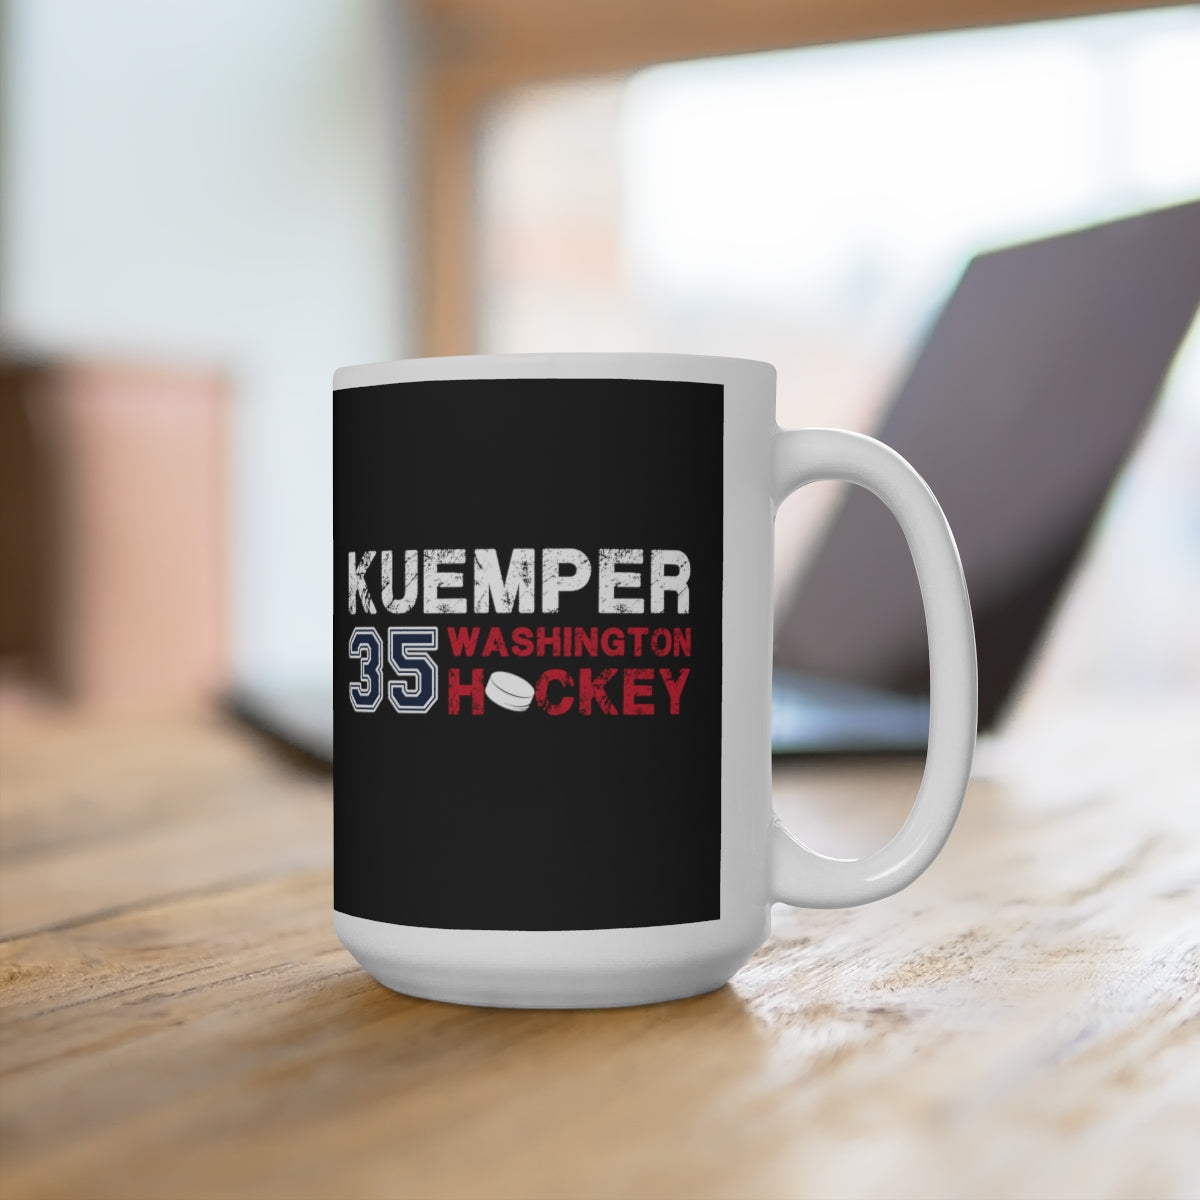 Kuemper 35 Washington Hockey Ceramic Coffee Mug In Black, 15oz